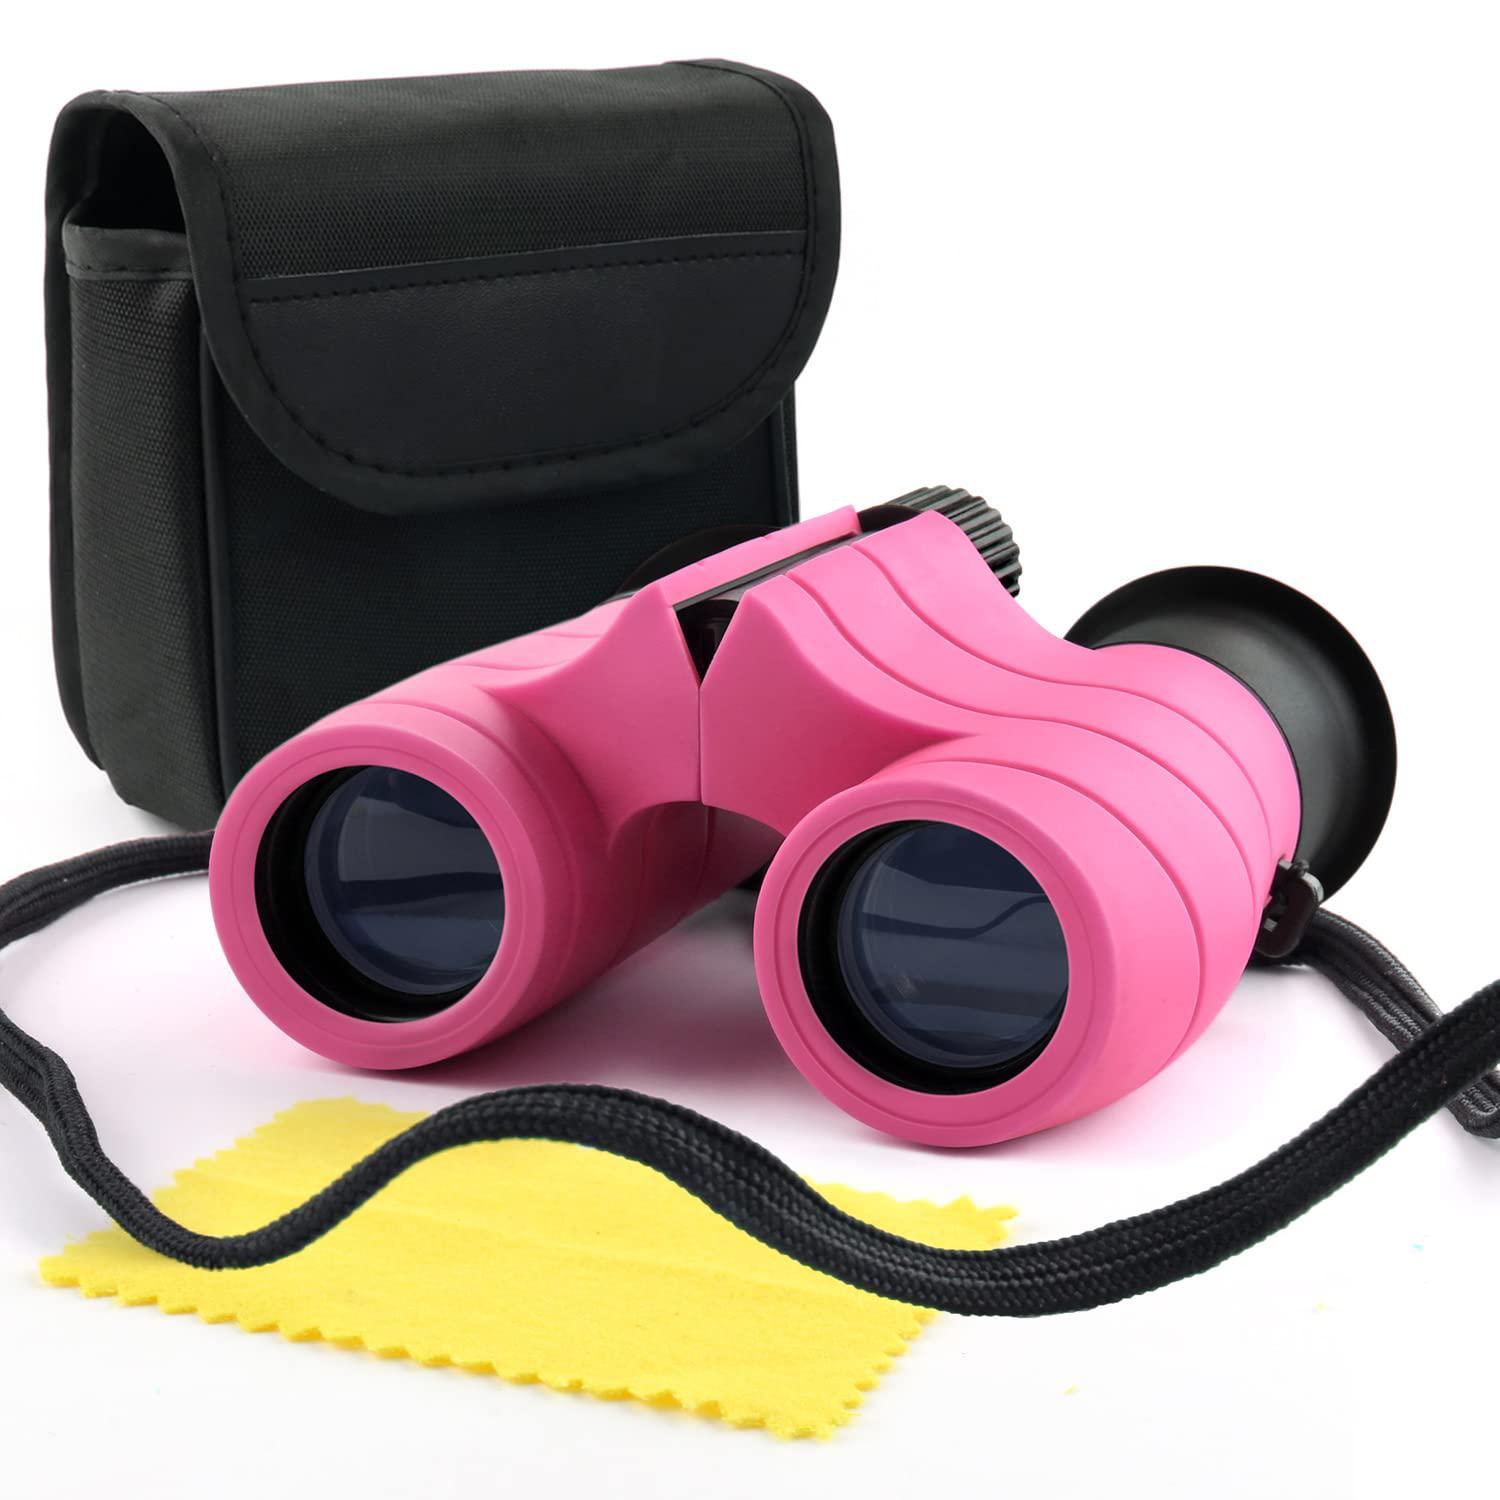 Scotamalone binoculars for kids with compass 8x21 children toy real binocular gifts for 3-12 years boys girls high resolution shockproof 